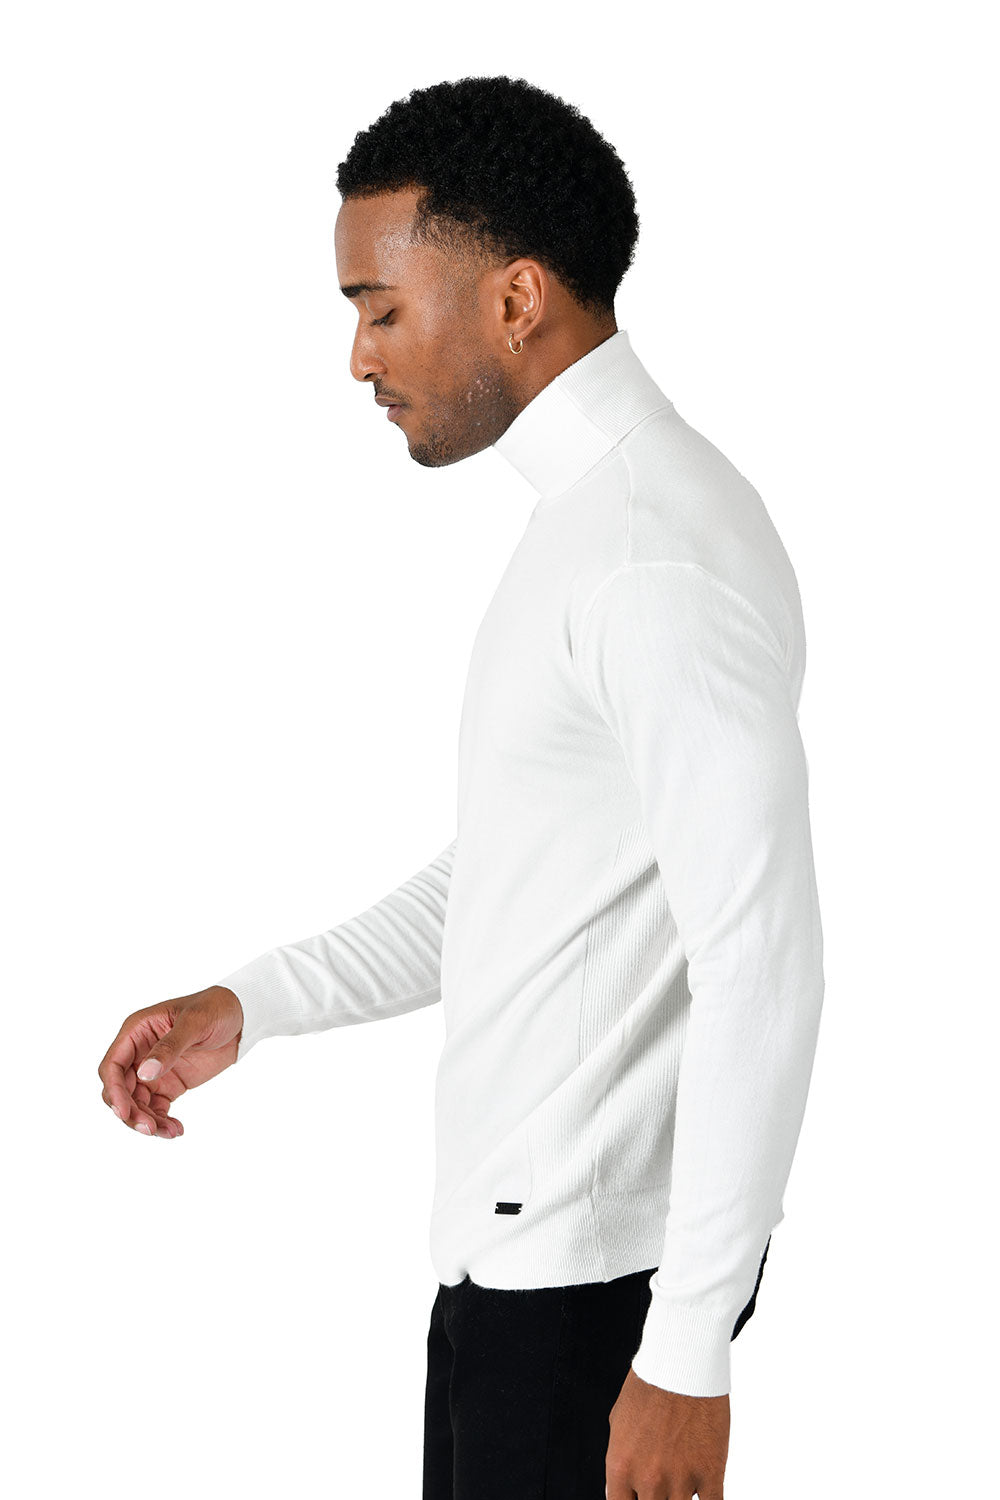 Men's Turtleneck Ribbed Solid Color Basic Sweater LS2100 White